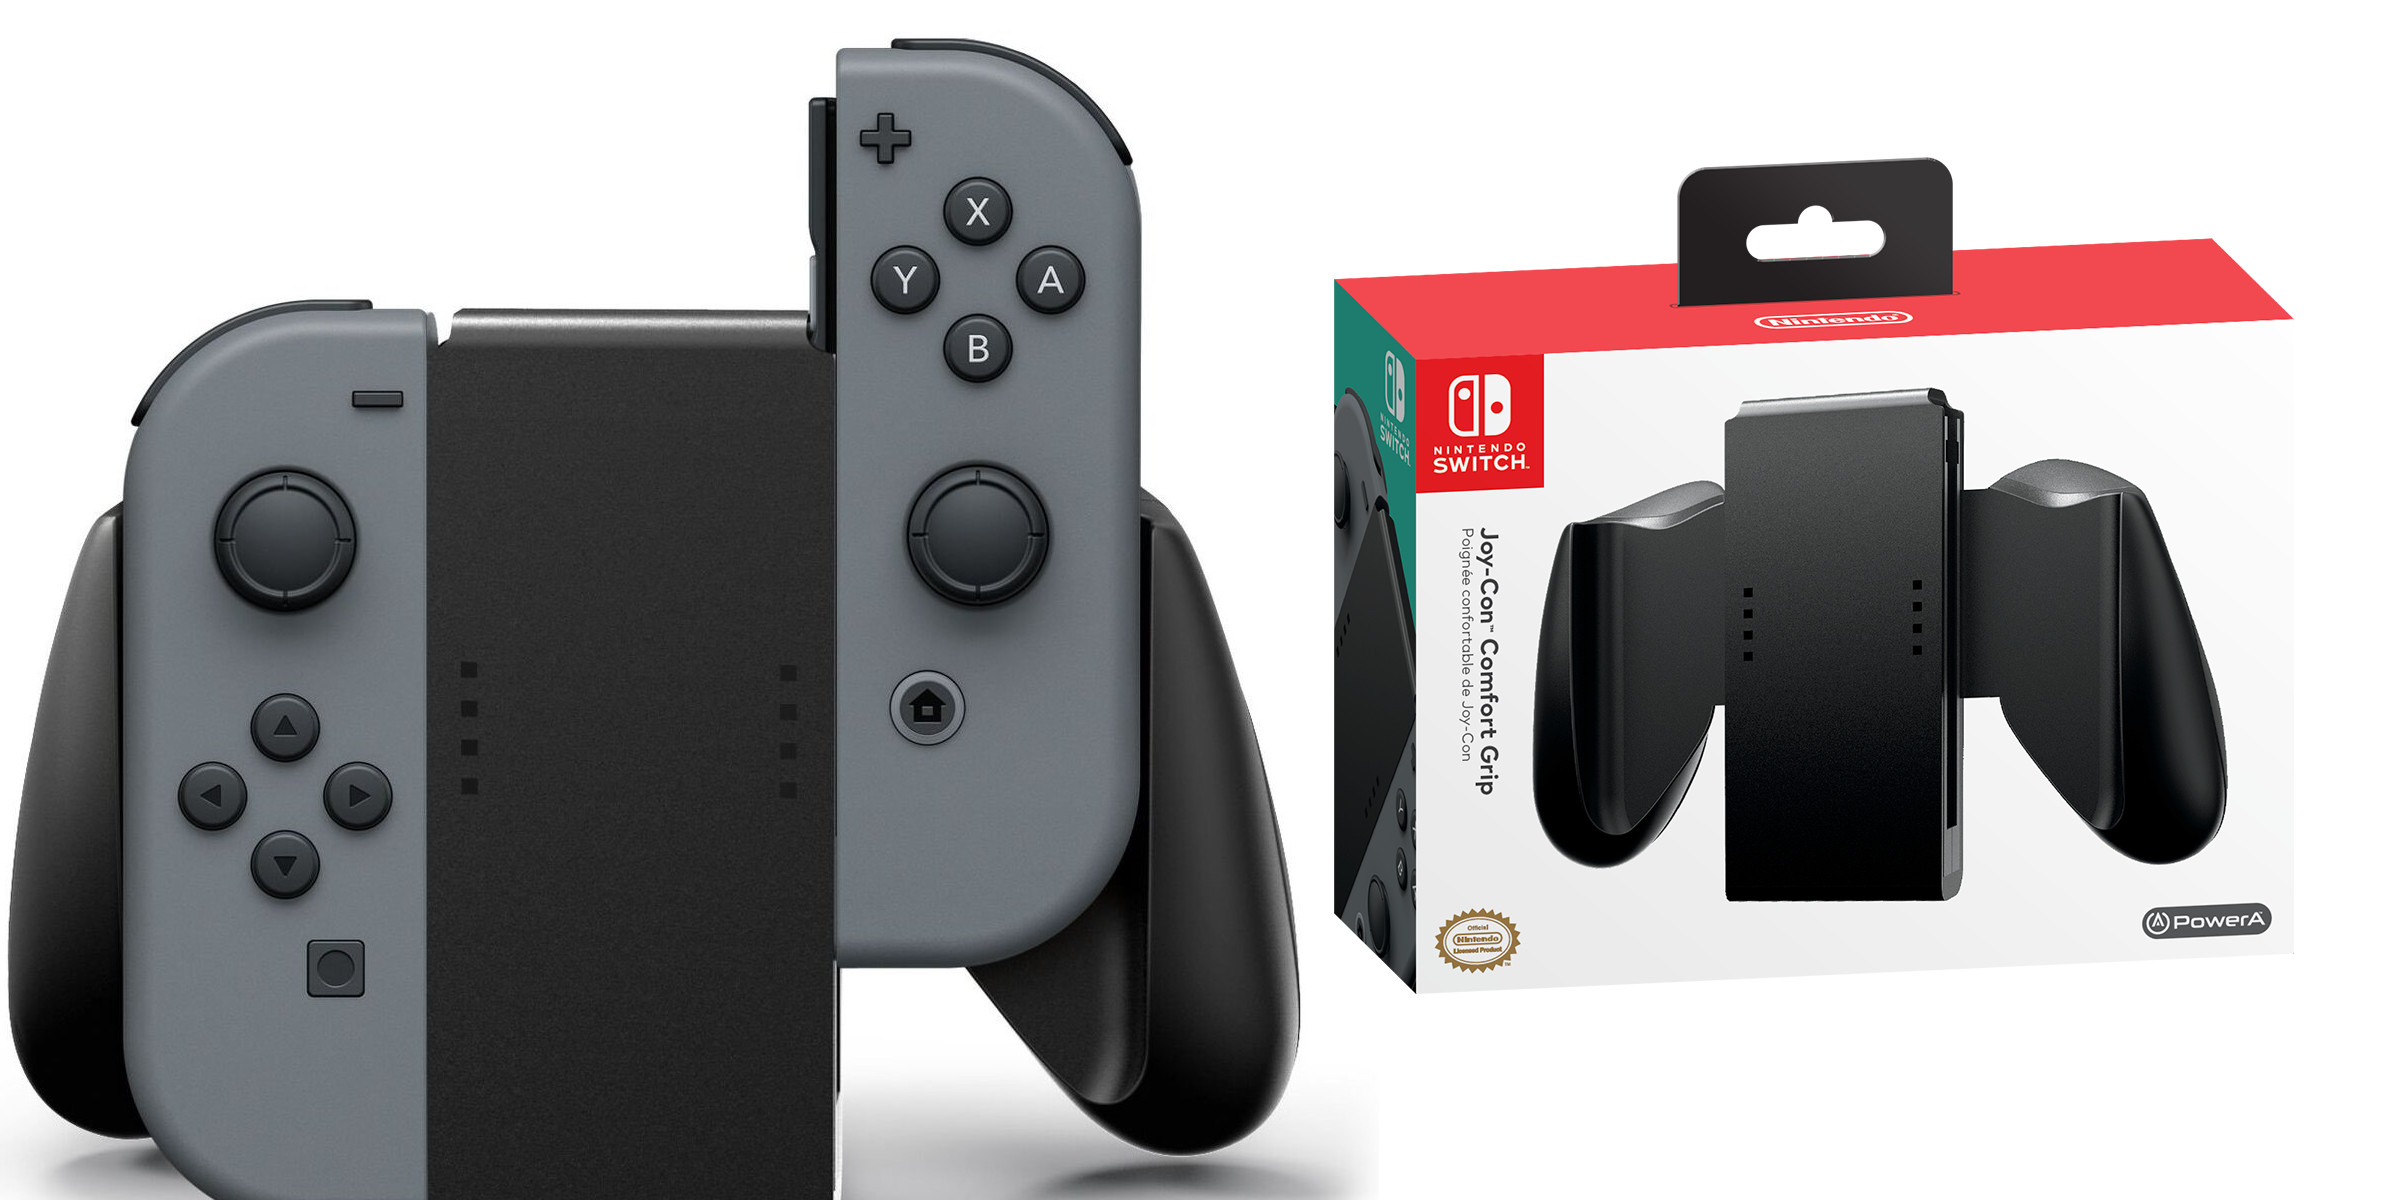 Nintendo Switch Joy-Con Comfort Grip by PowerA under $10 Prime shipped